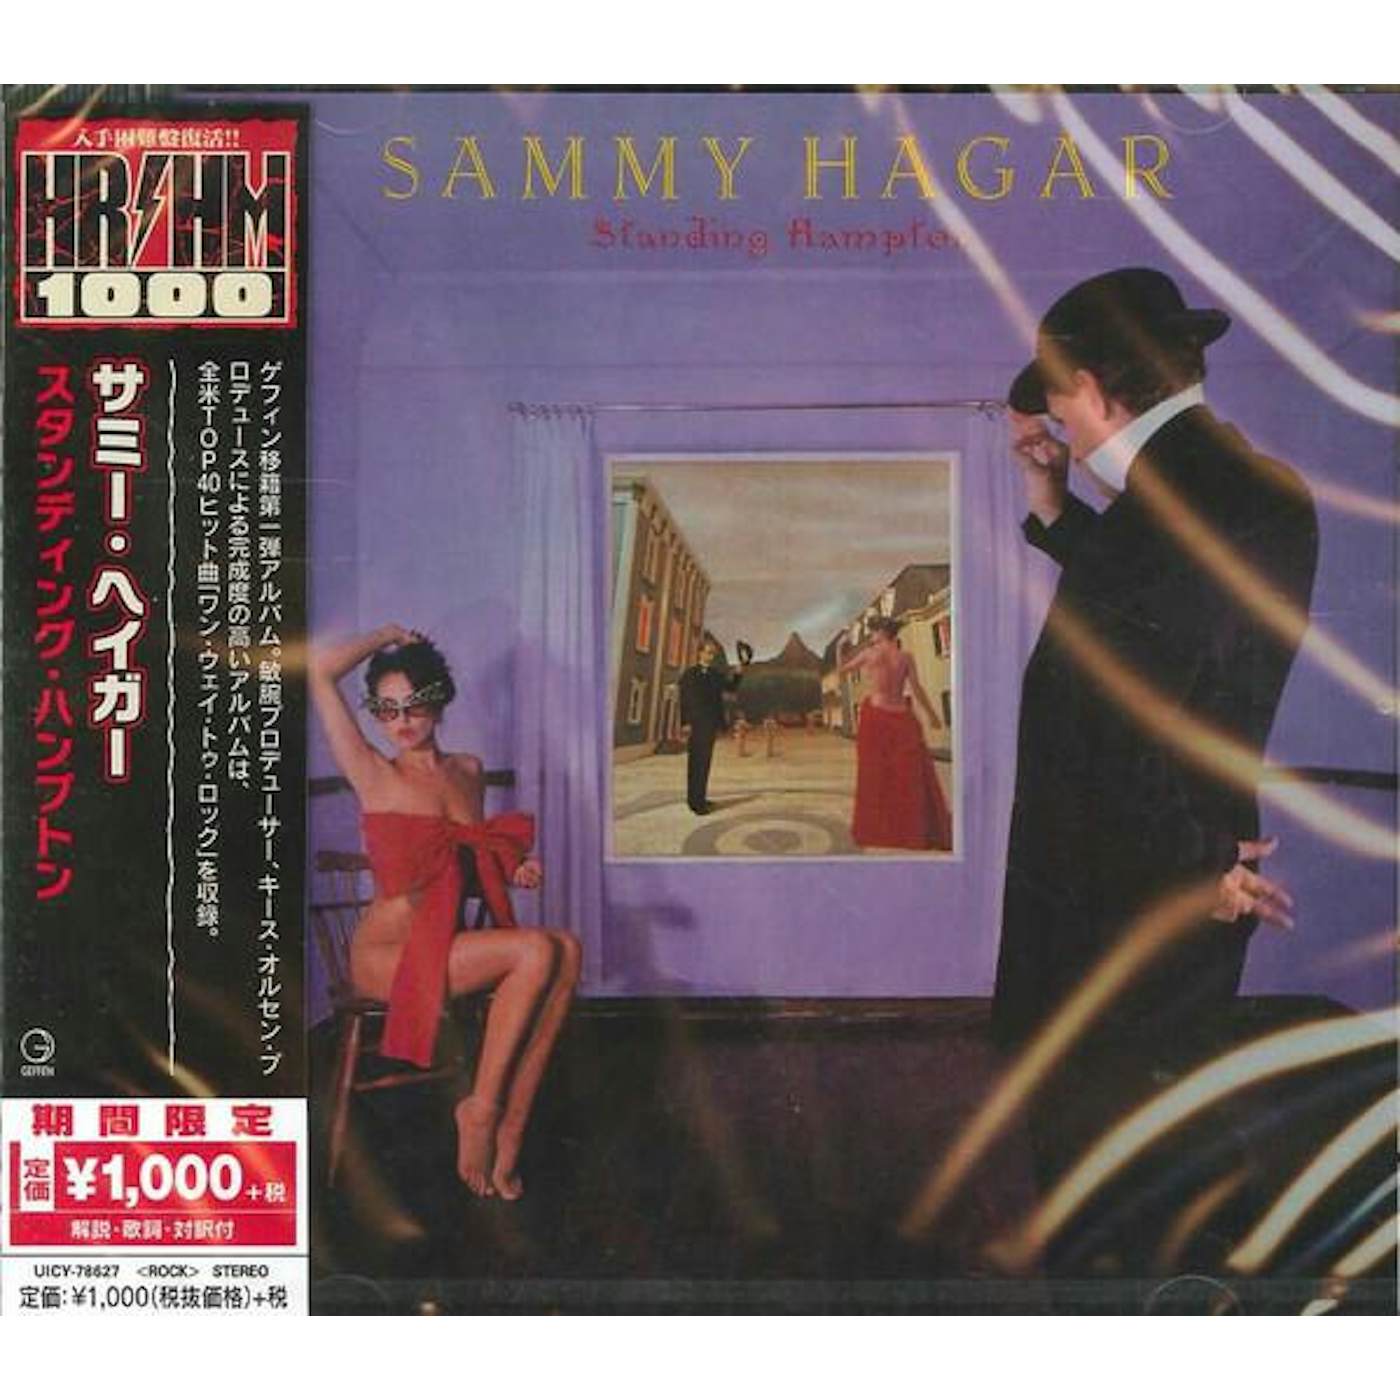 Sammy Hagar STANDING HAMPTON CD